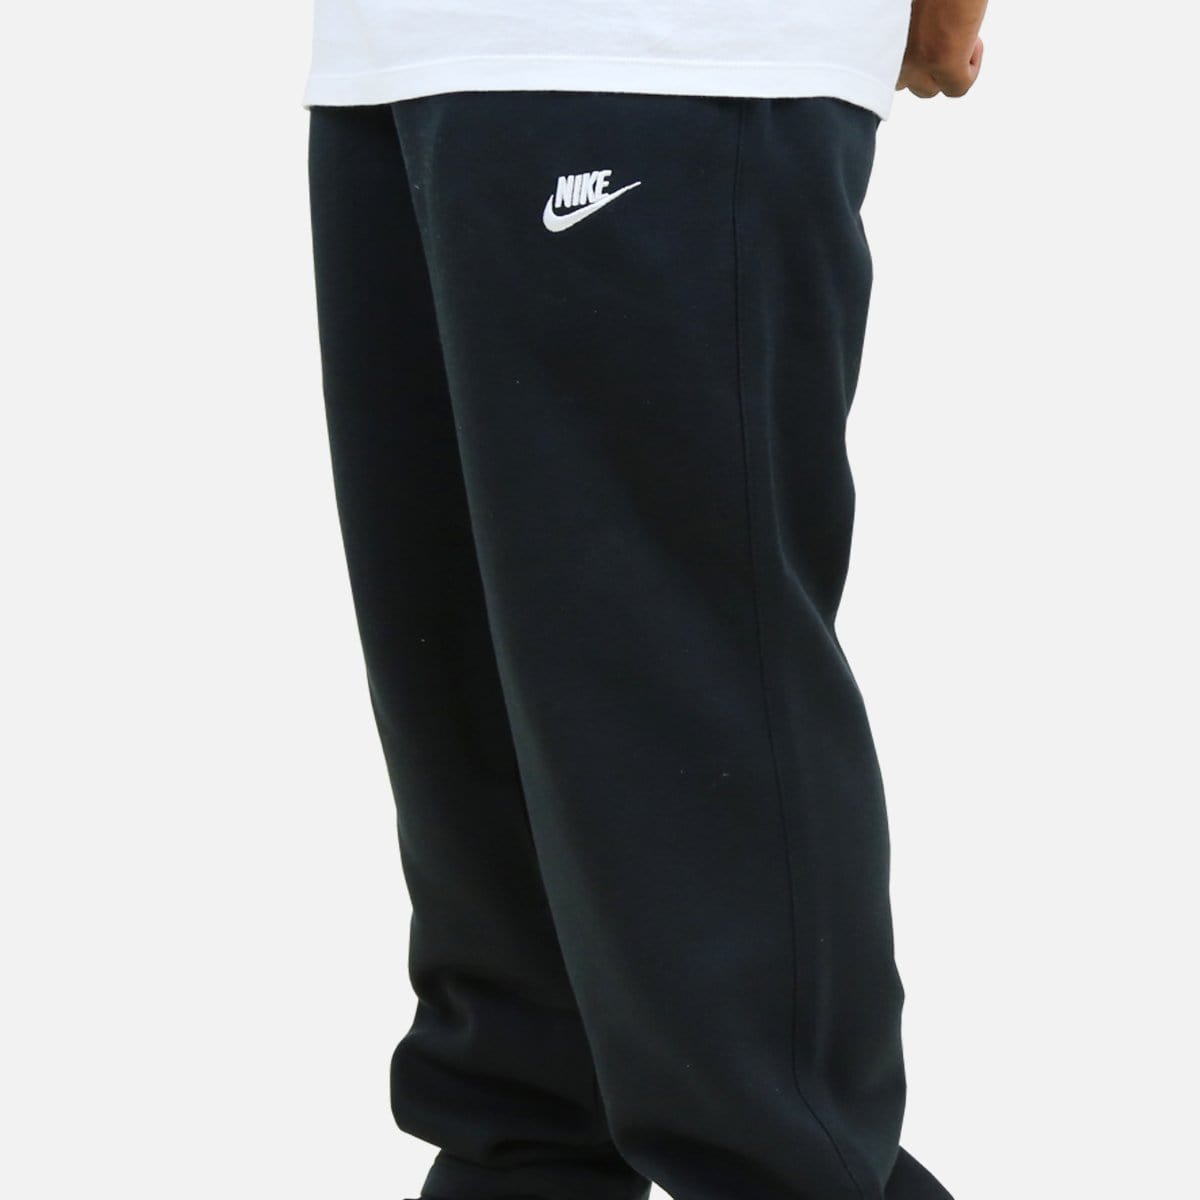 RUVilla.com is where to buy the Nike Club OH Fleece Pants (Black)!